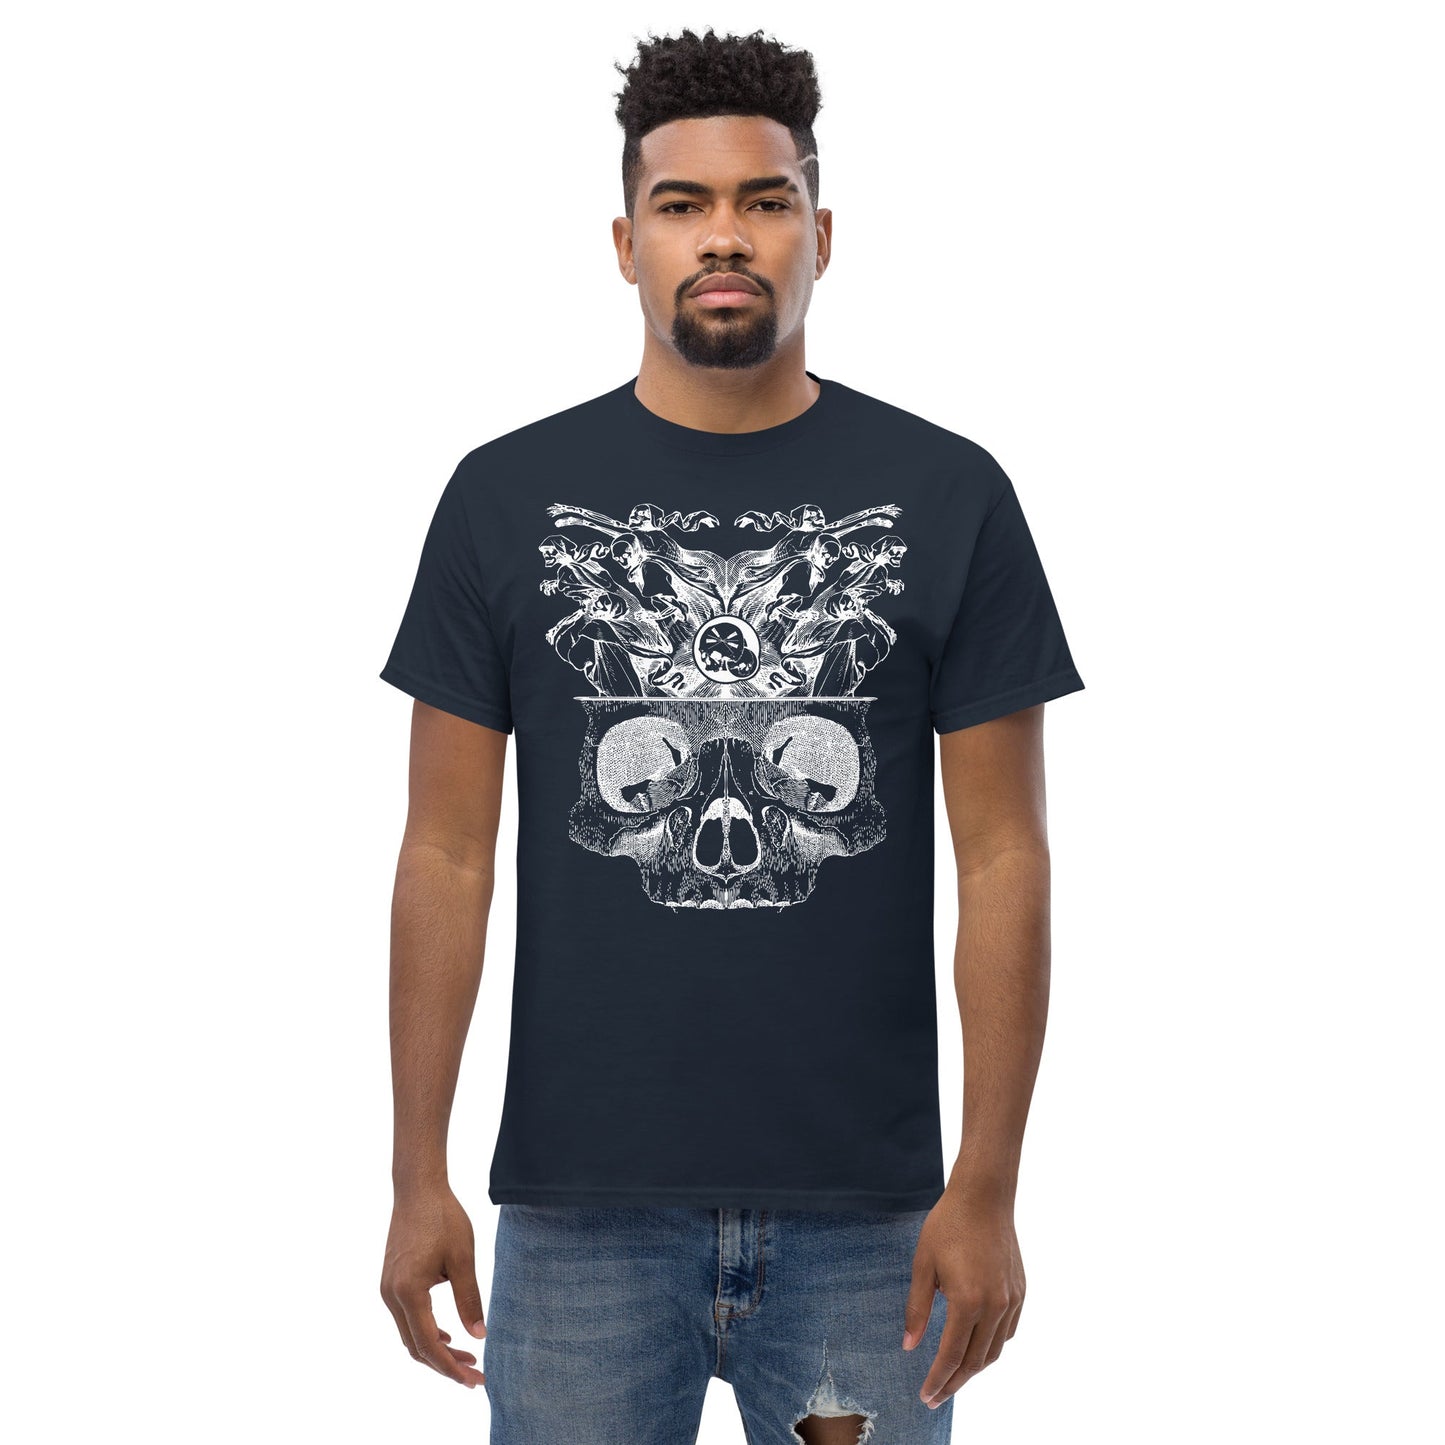 T-shirt classique homme "Démons" gravure blanche Free Shipping - The Needles Factory